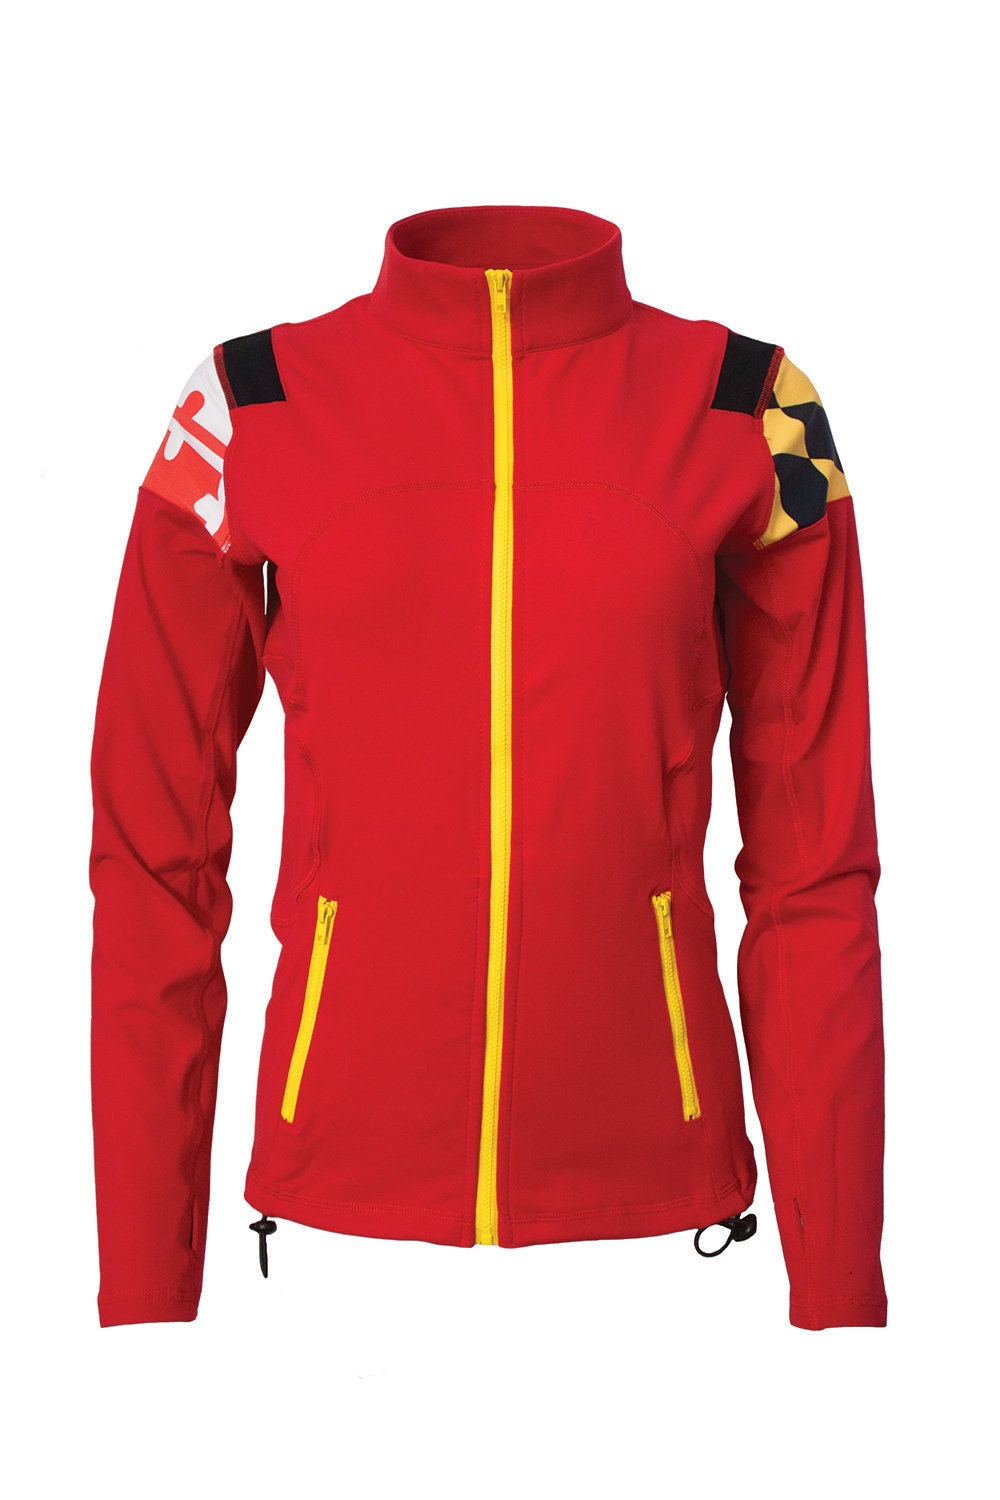 Maryland Flag Women's Full Zip-Up Yoga Track Jacket (Red)